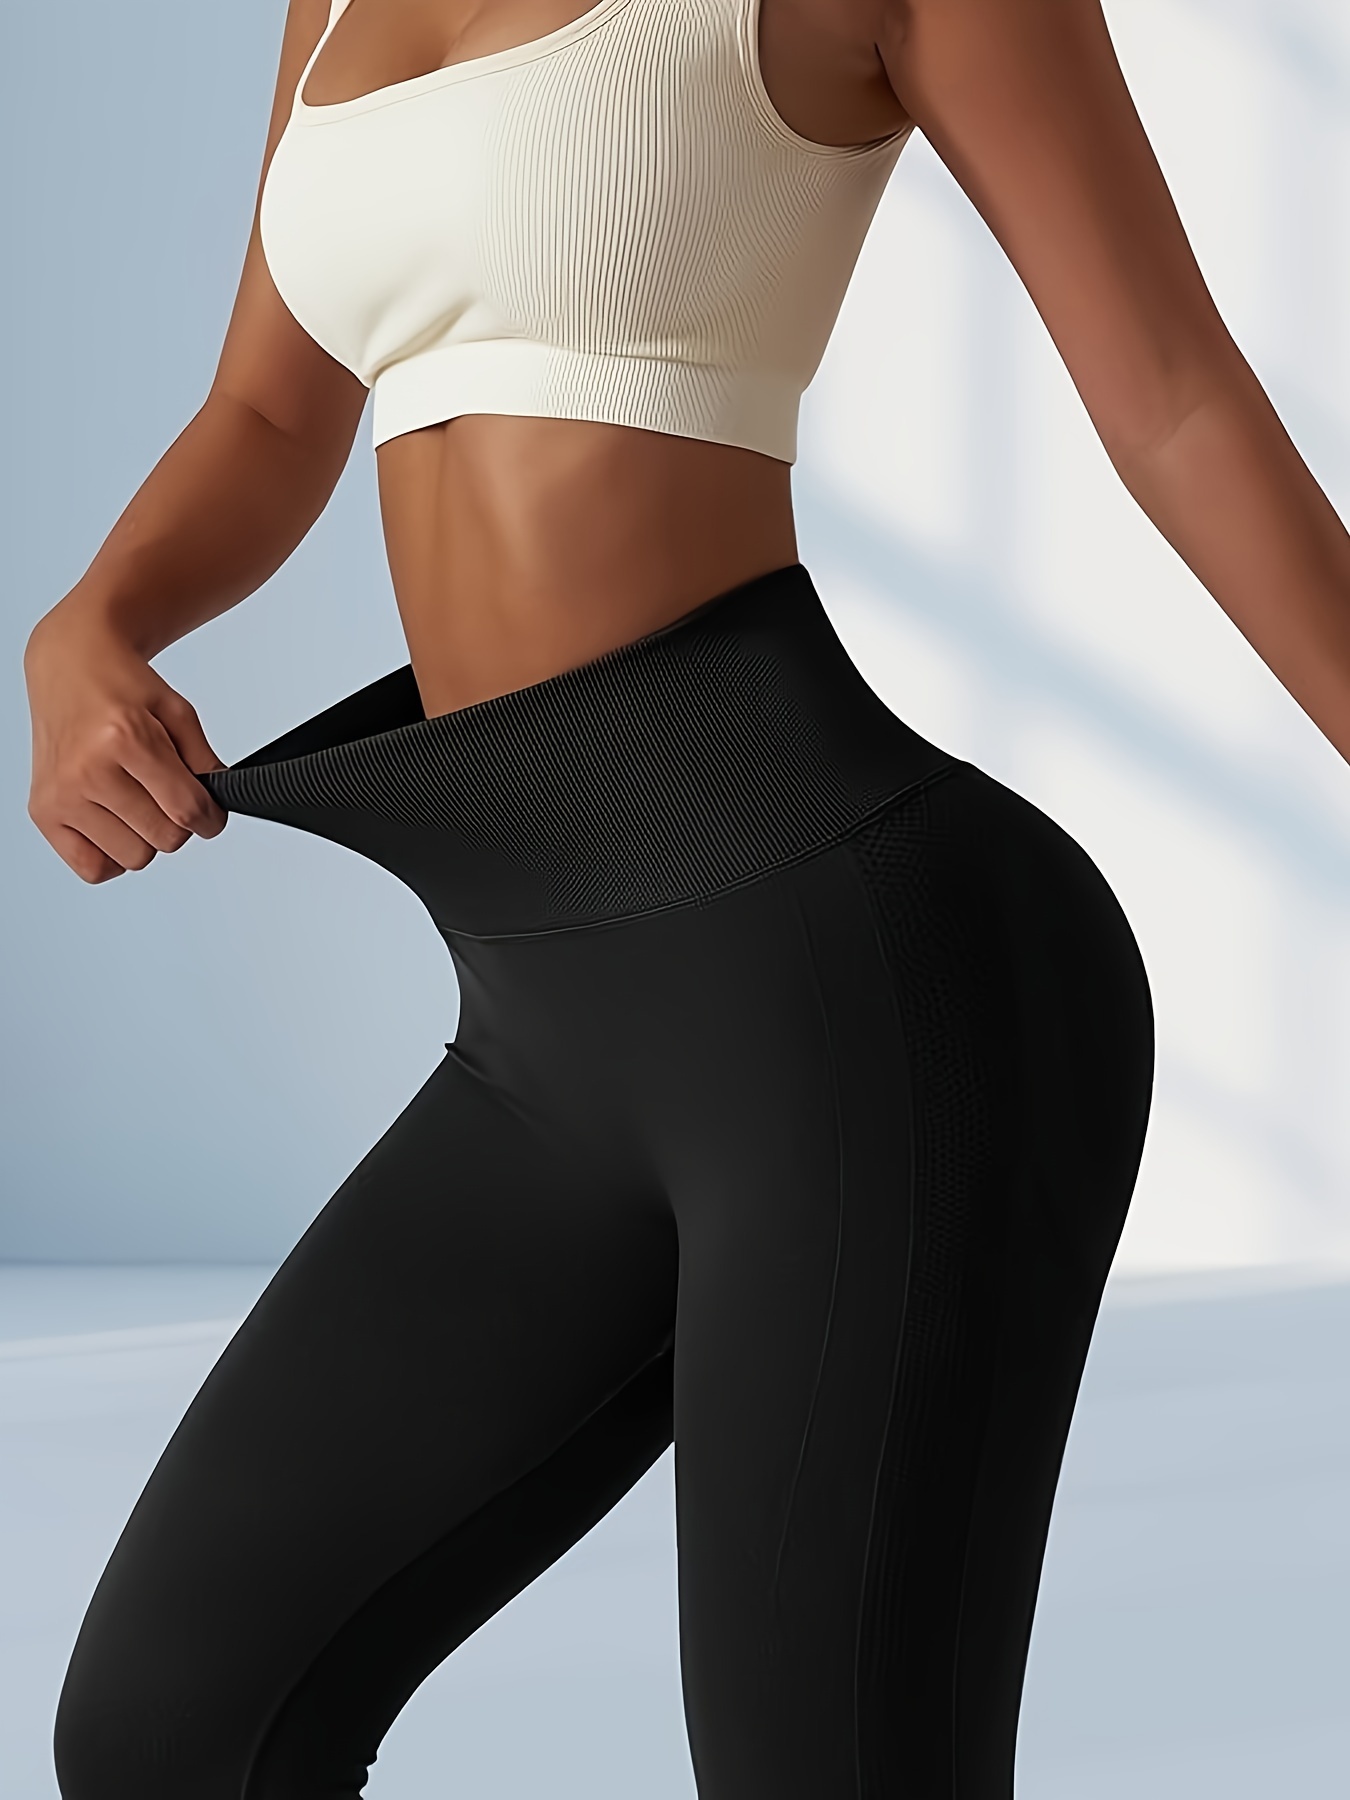 Desol High Waist Tummy Control Leggings for Women, 2528 Full Length Yoga  Pants with Inner Pocket Running Butt Lifting Tights